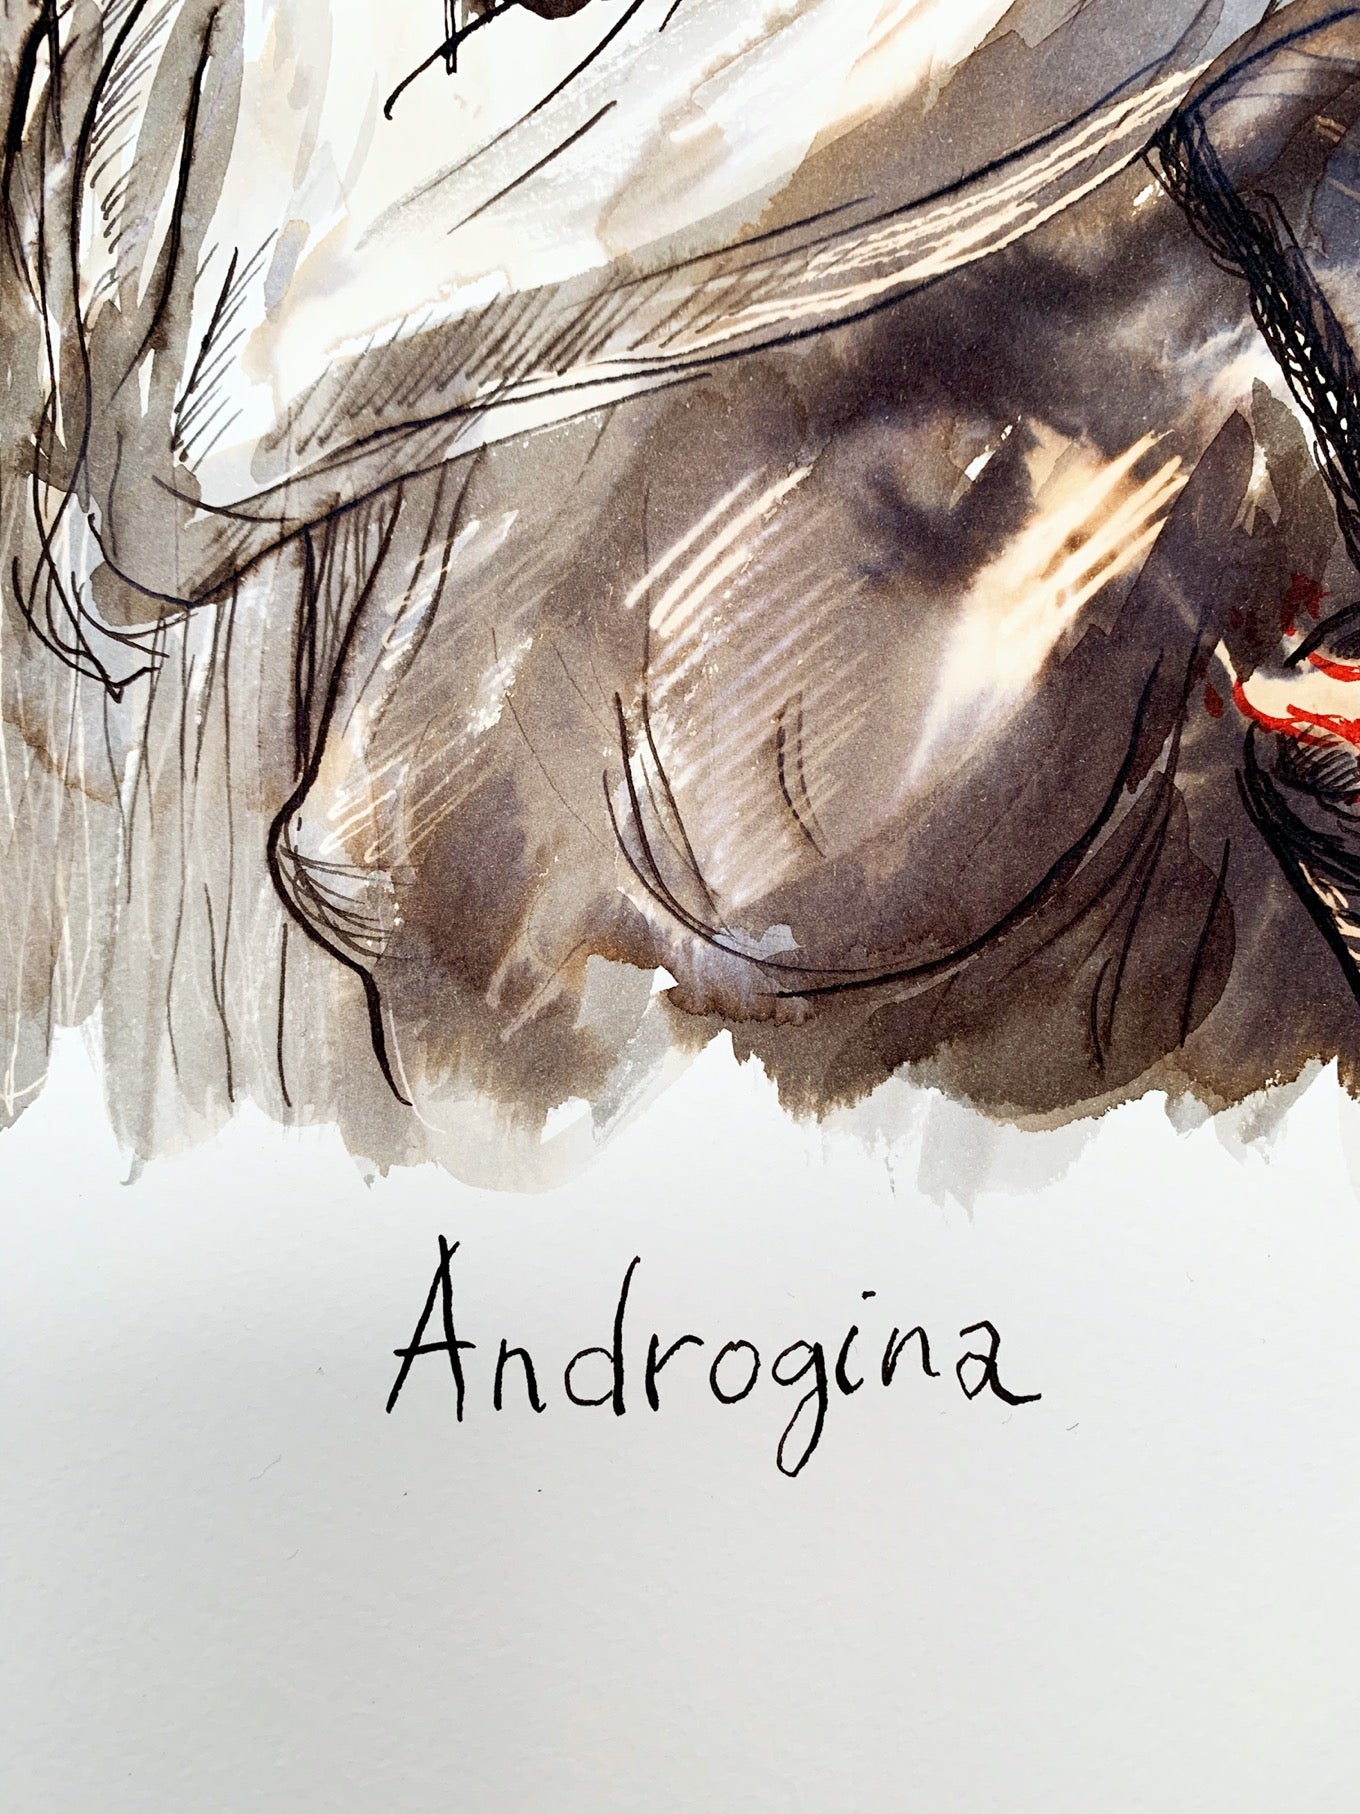 Androginas